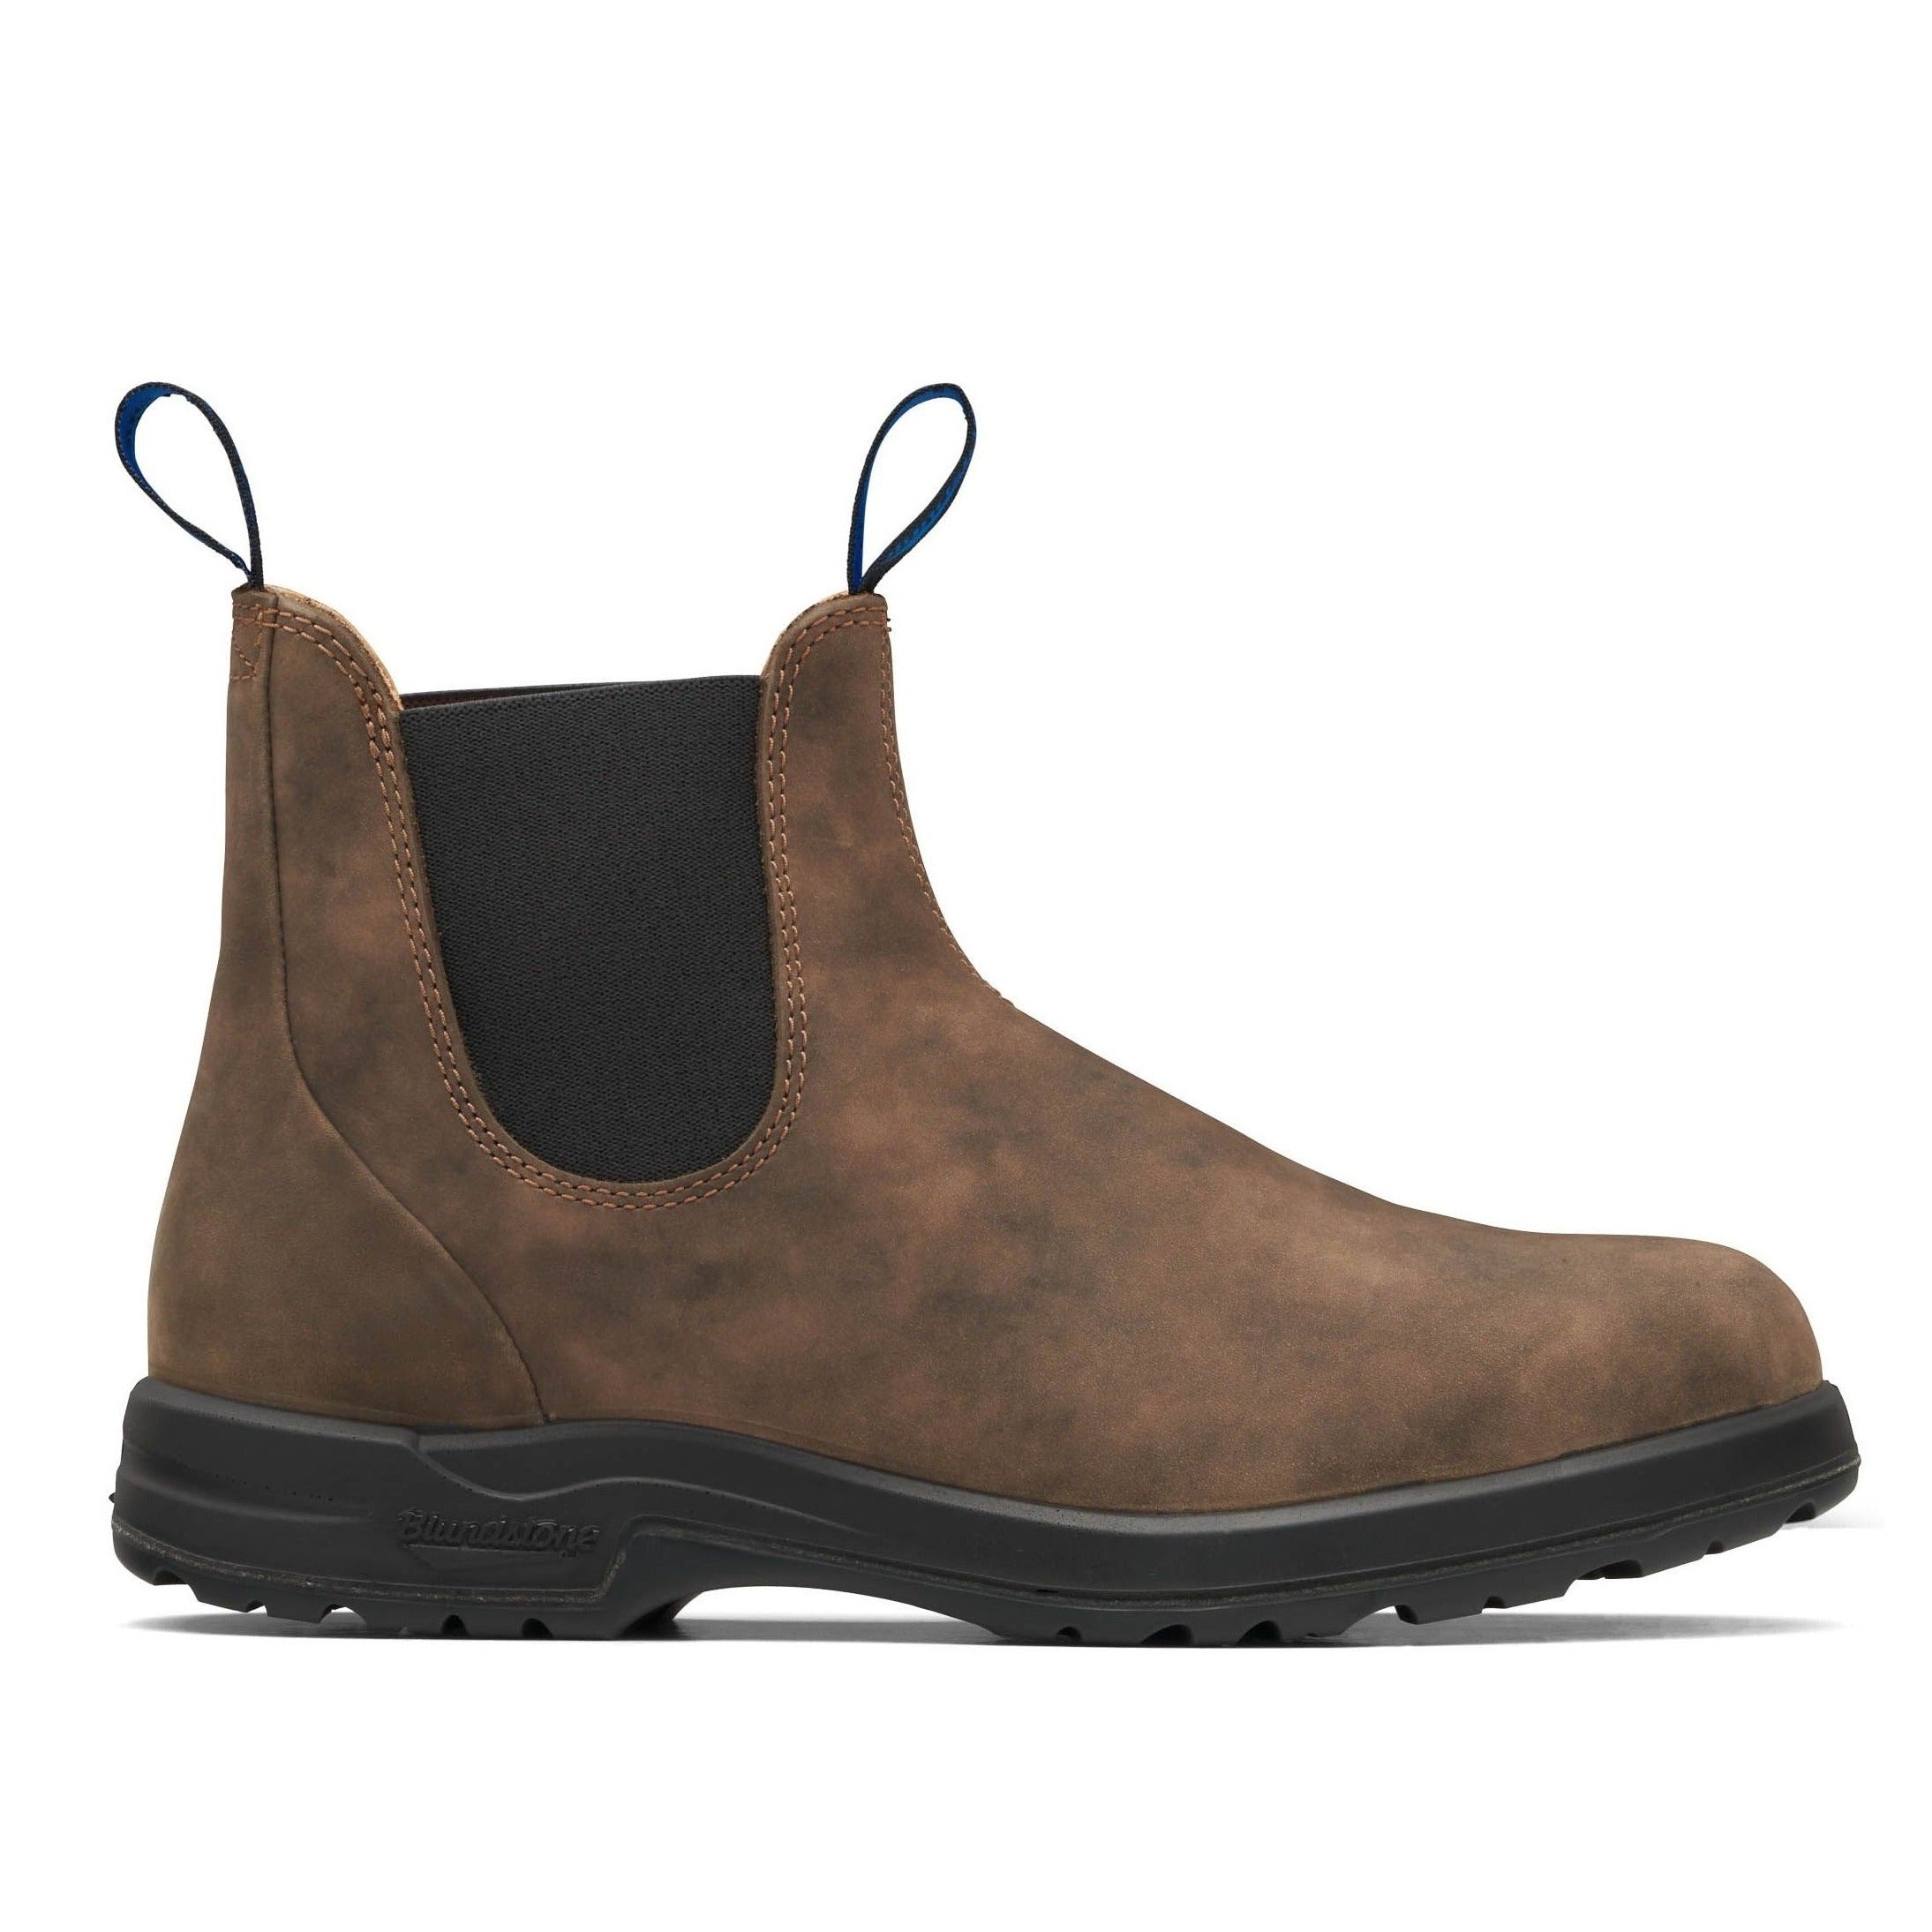 Blundstone #2242 - Winter Thermal All-Terrain boot vibram rustic brown